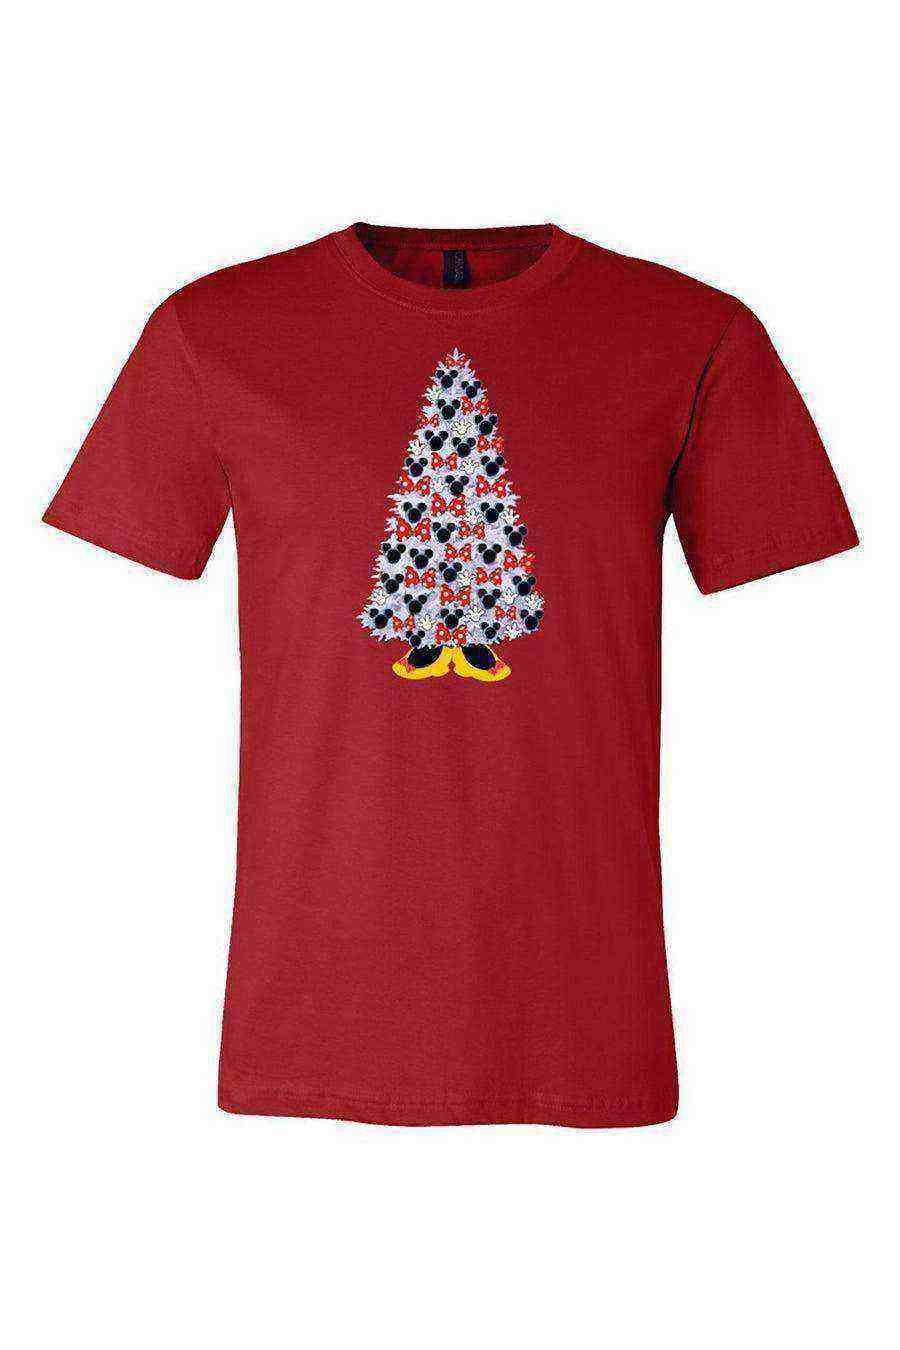 Womens | Minnie Christmas Tree Shirt - Dylan's Tees